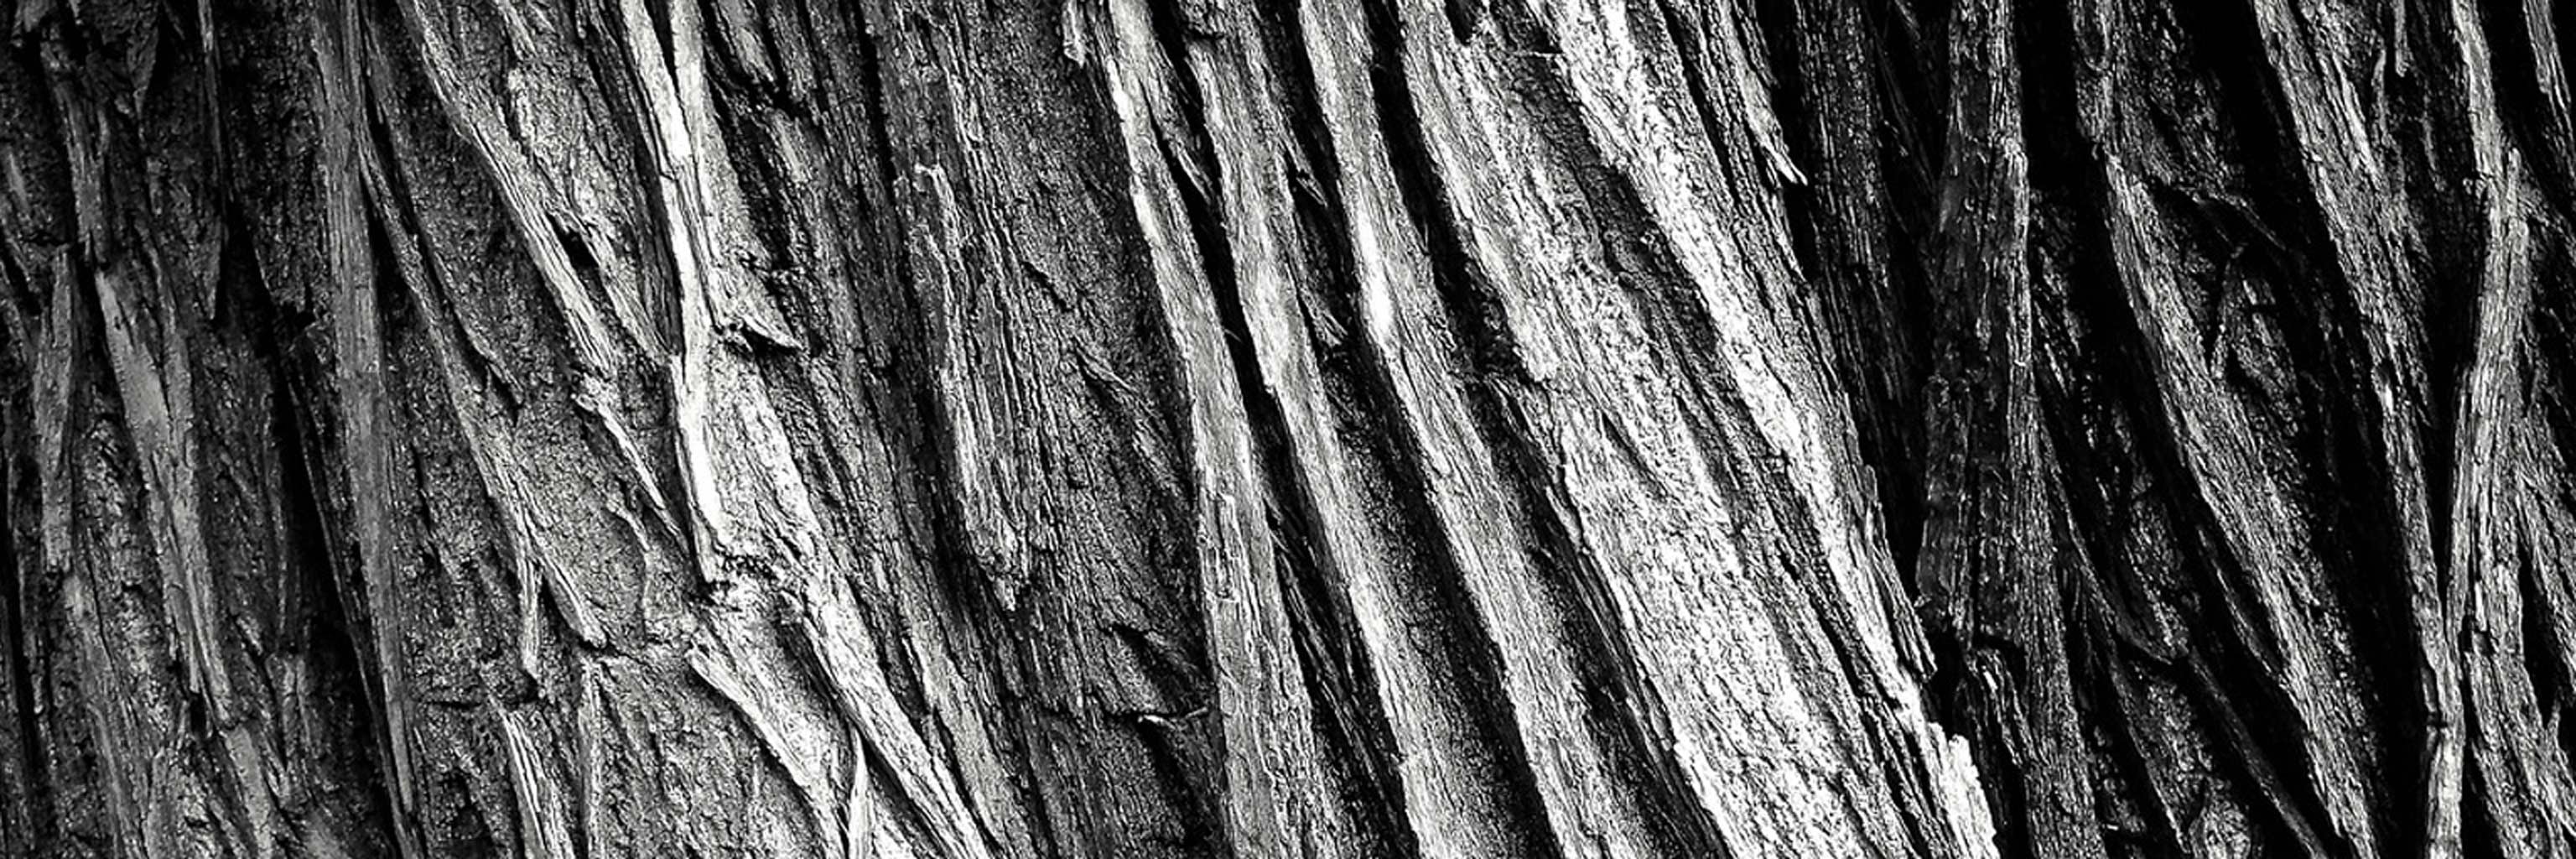 black and white photo of tree bark